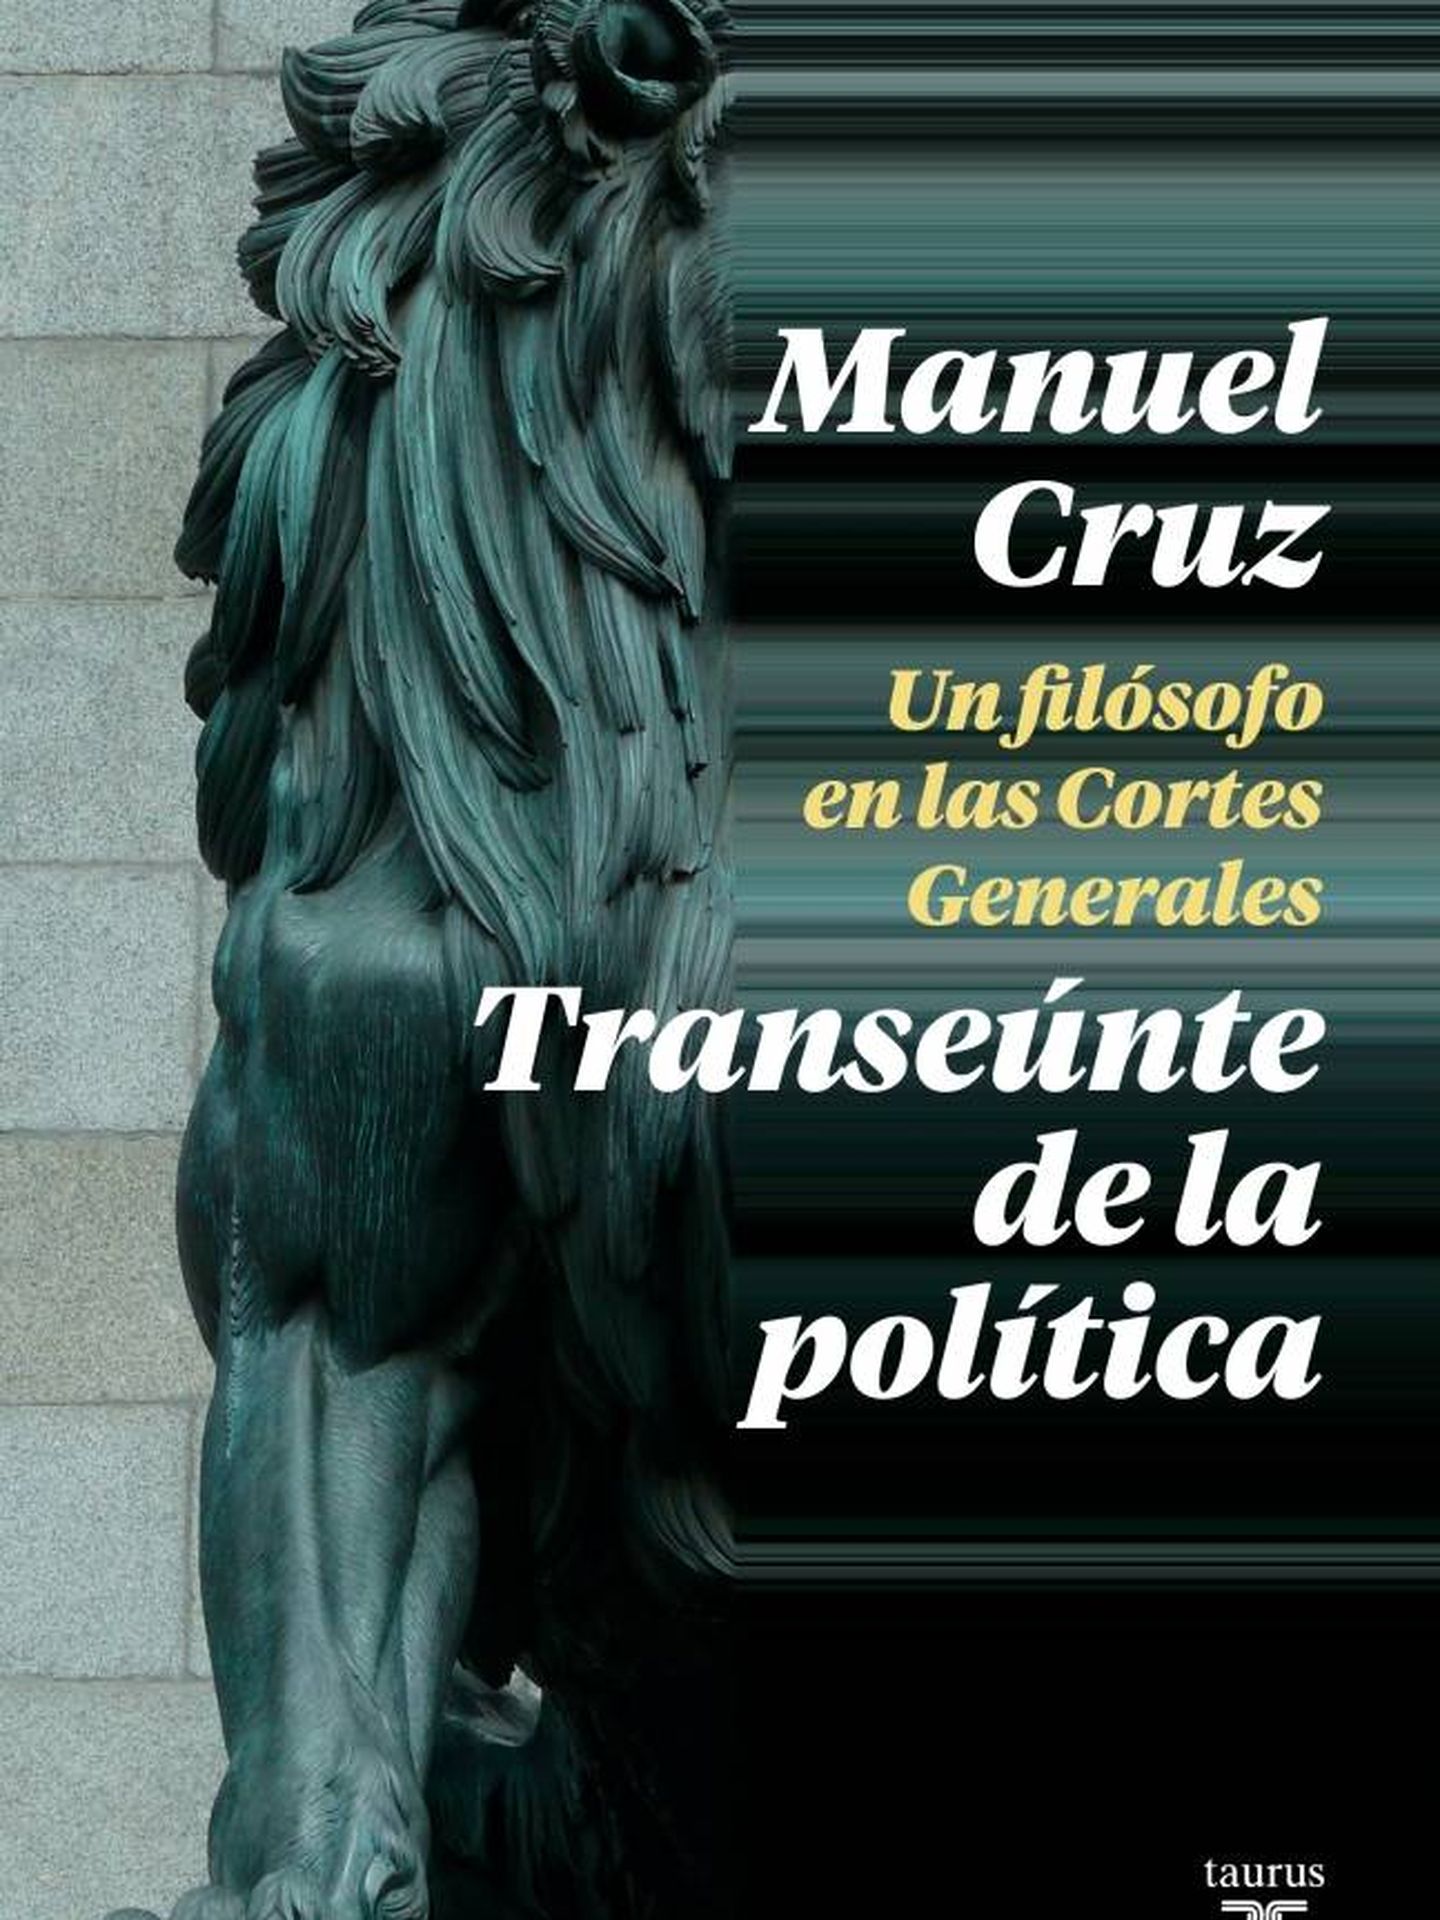 Portada del libro de Manuel Cruz